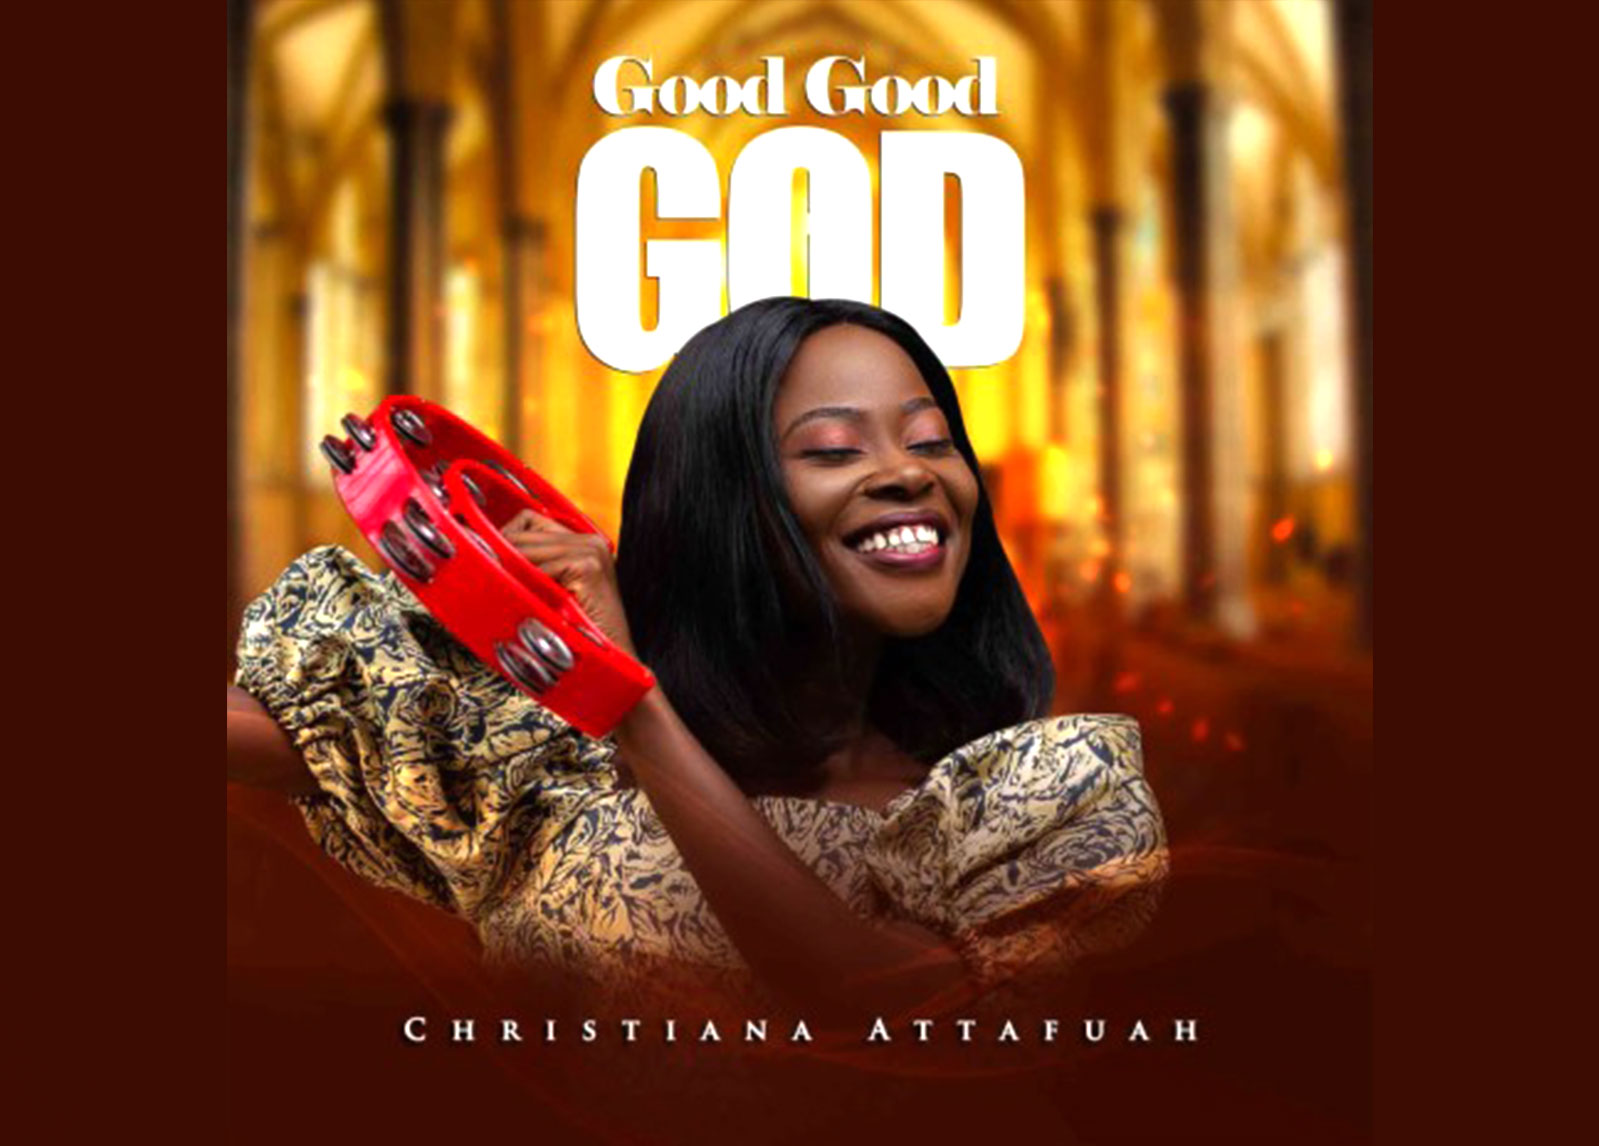 MUSIC Video: Good Good God - Christiana Attafuah